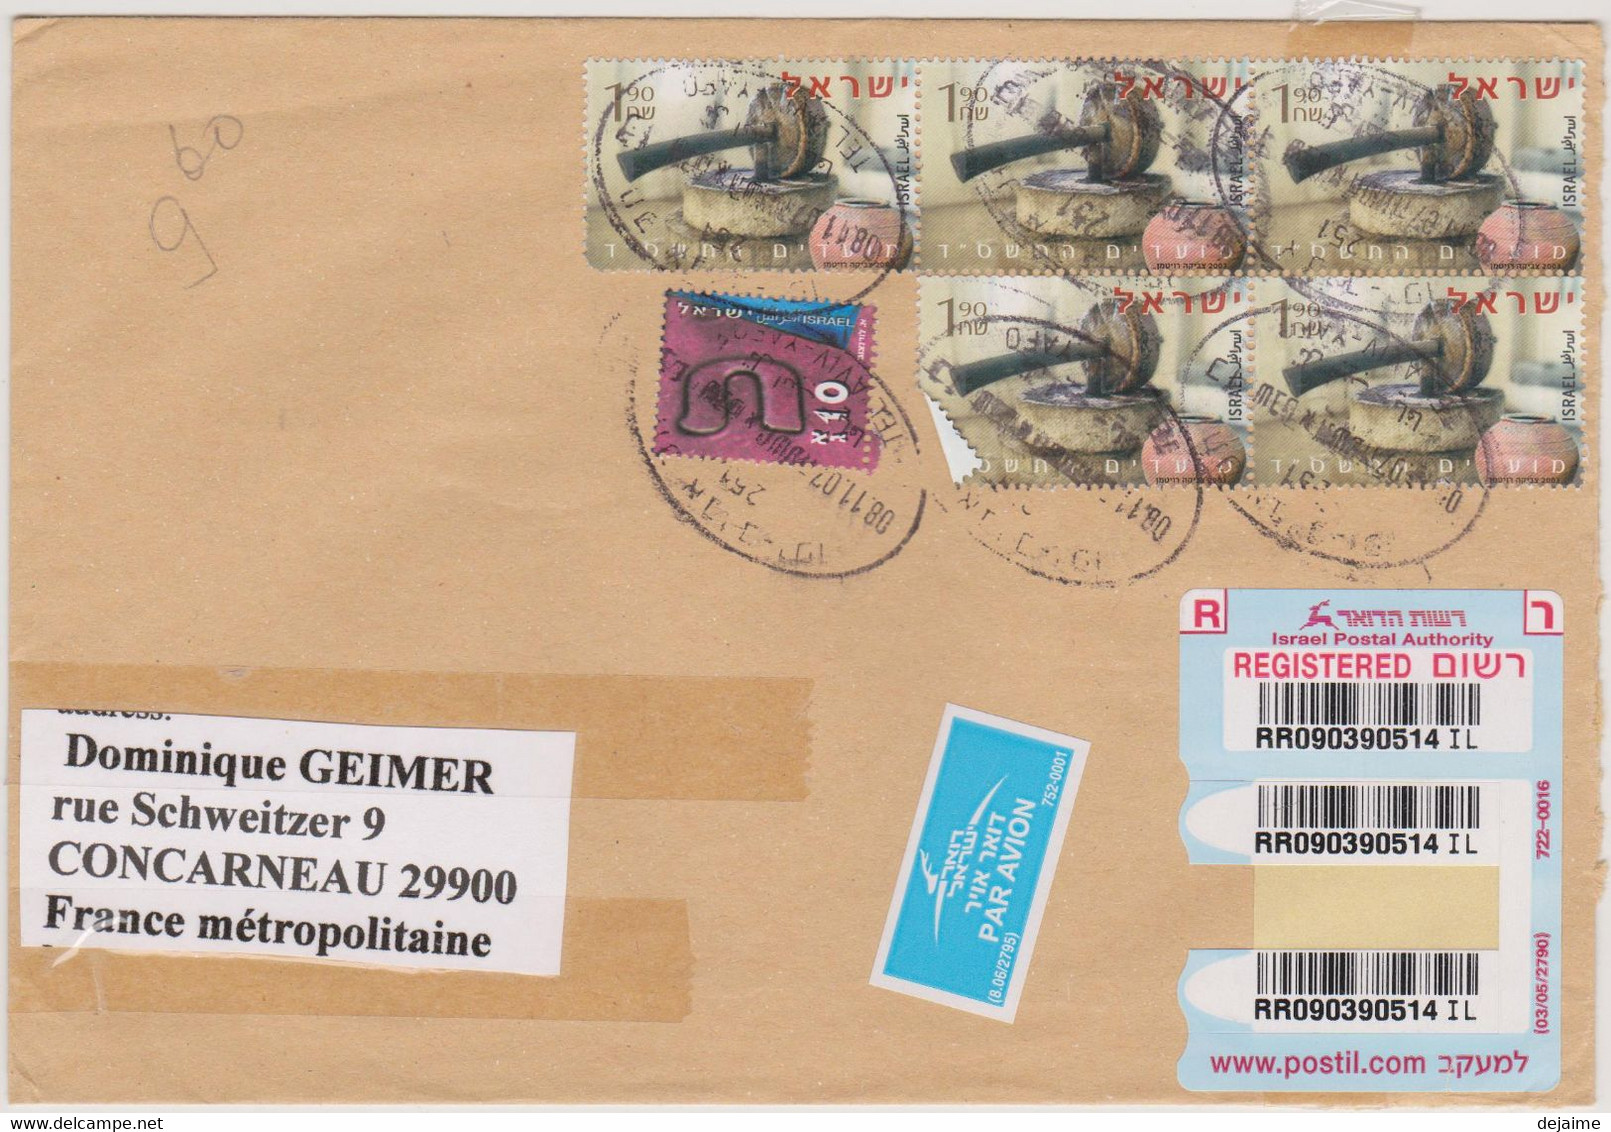 ISRAEL 2007 Enveloppe Recommandée Vers La France Affranchissement N°YT 1678 Huile D'Olive X5  Cachet 8 11 2007 - Briefe U. Dokumente